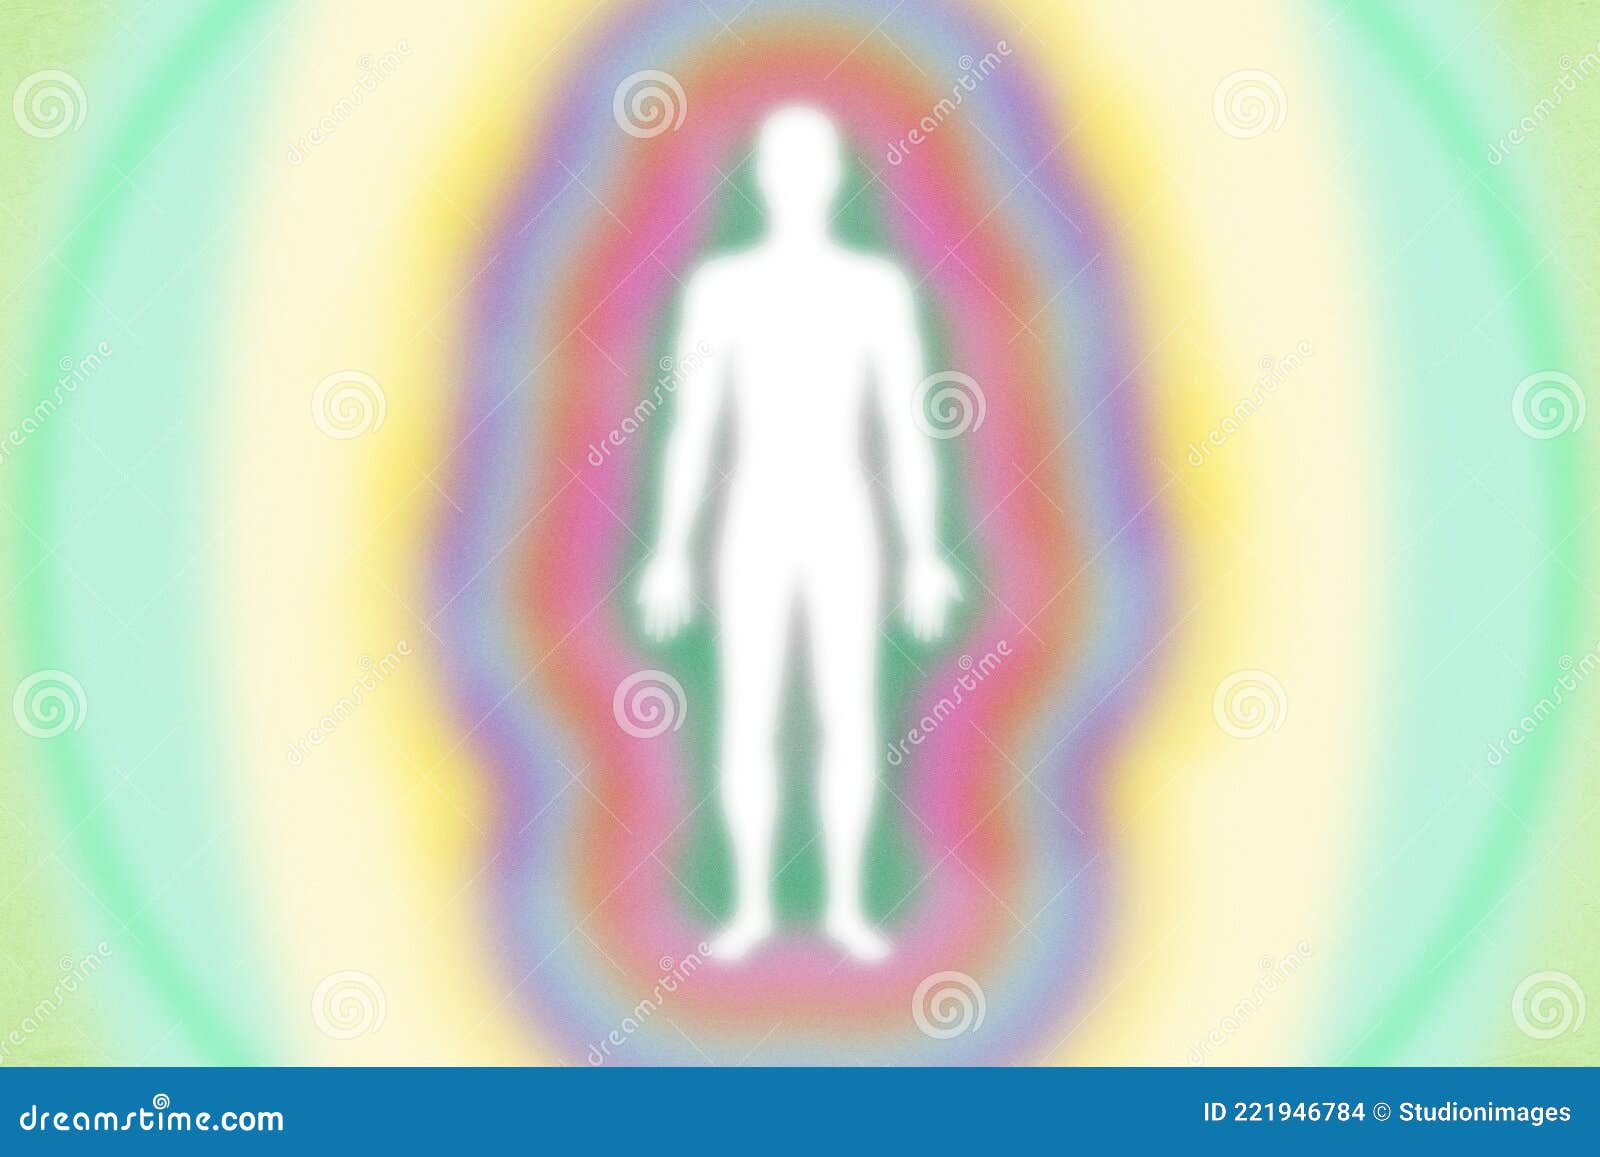 muted retro pulsing rainbow aura layers - energy field with human figure